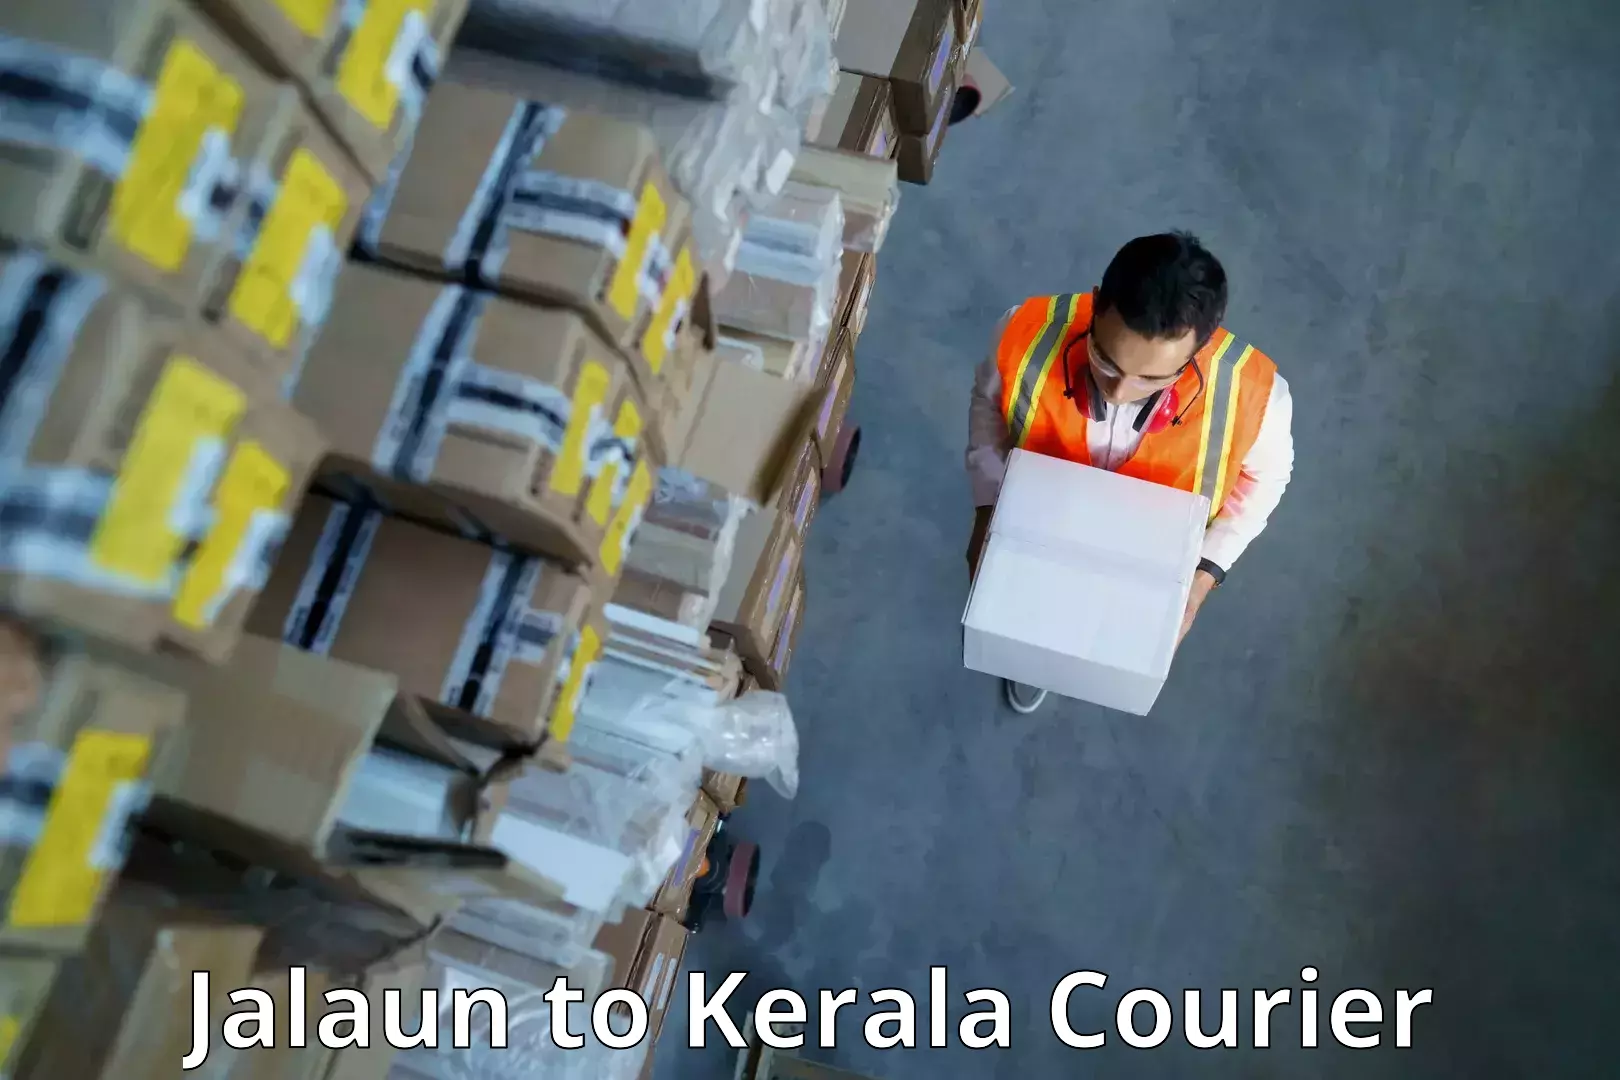 Easy return solutions Jalaun to Kerala